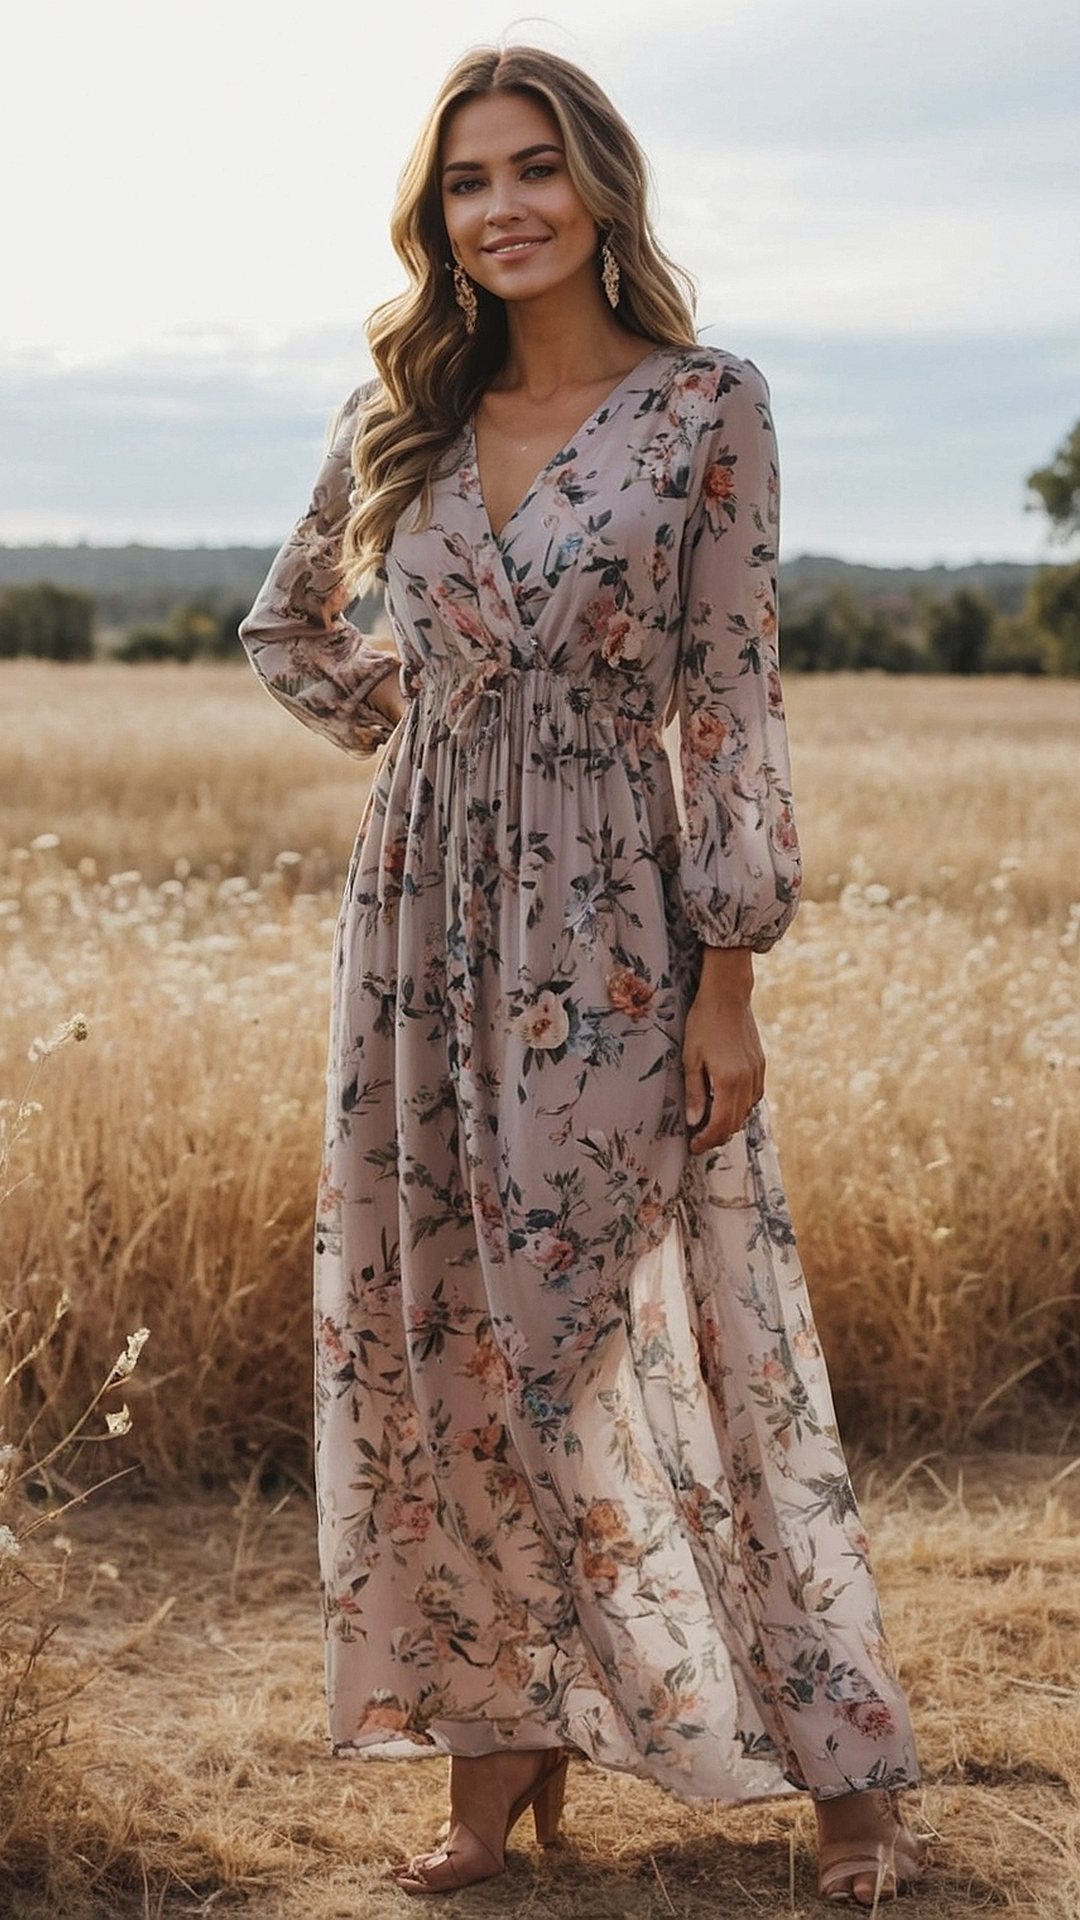 Blooming Beauties: Floral Maxi Dress Inspiration